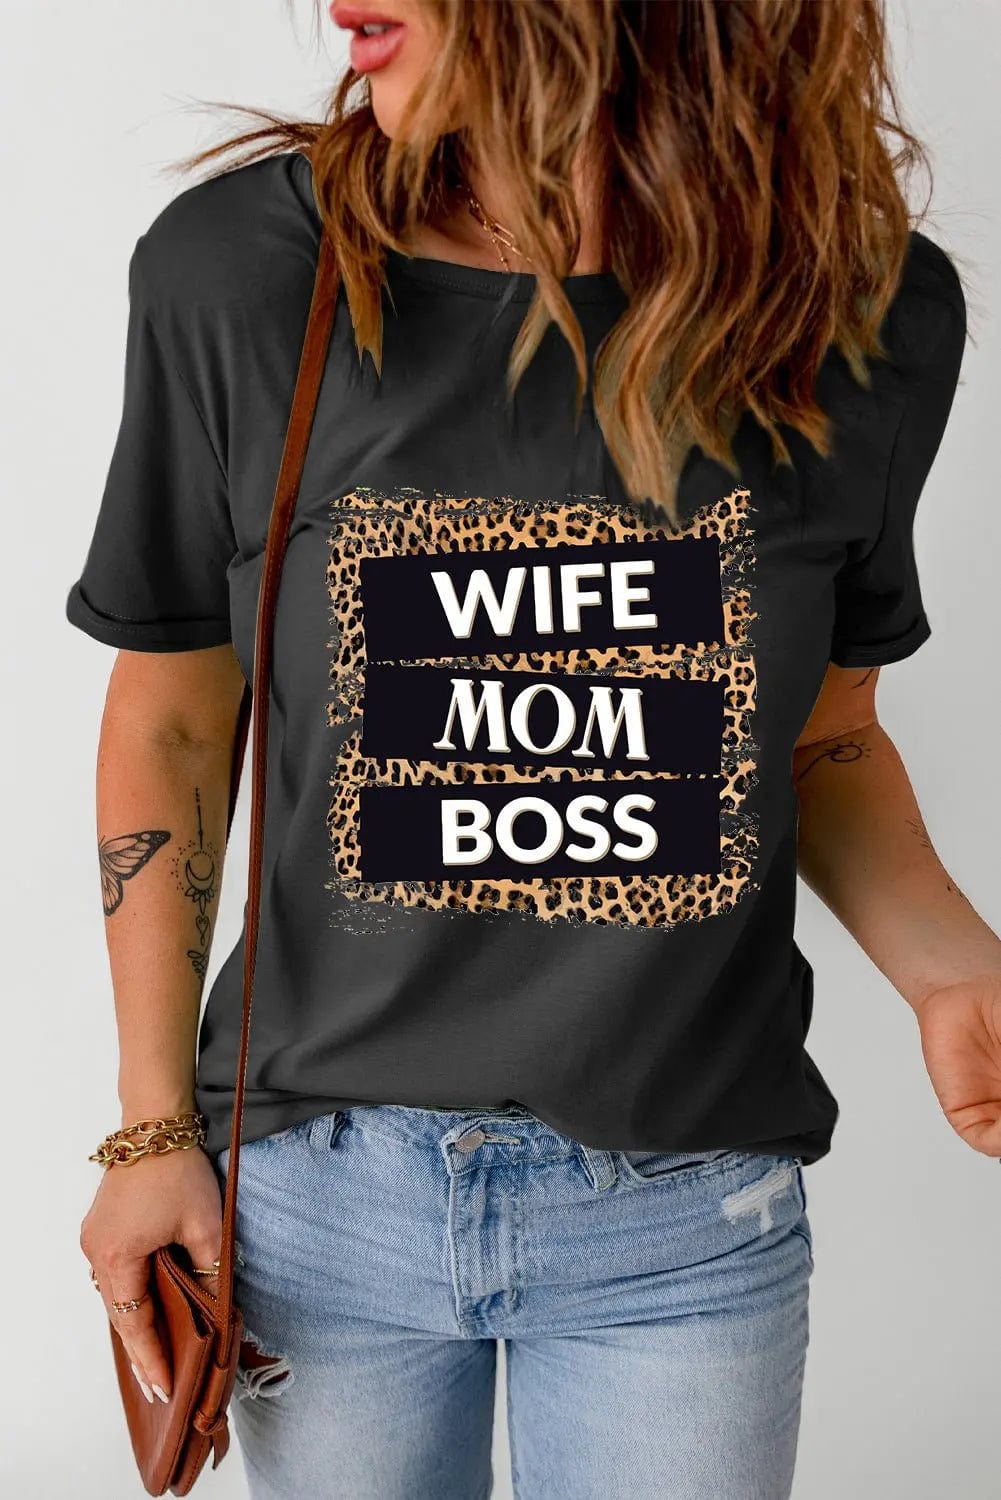 WIFE MOM BOSS Leopard Graphic Tee - CLASSY CLOSET BOUTIQUEWIFE MOM BOSS Leopard Graphic Teetops, shirts100101757551421100101757551421BlackS